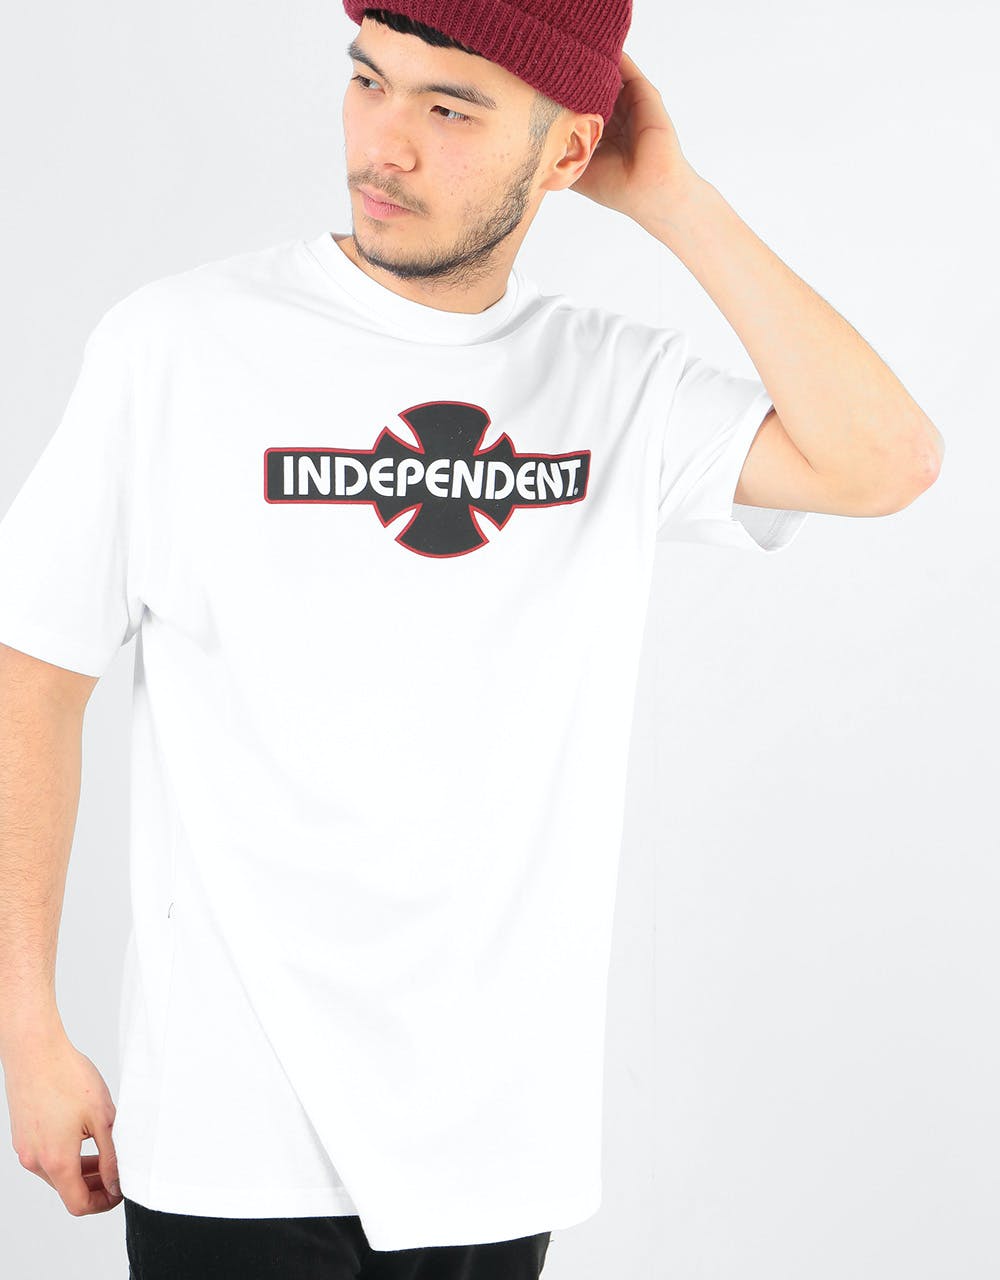 Independent O.G.B.C. T-Shirt - White